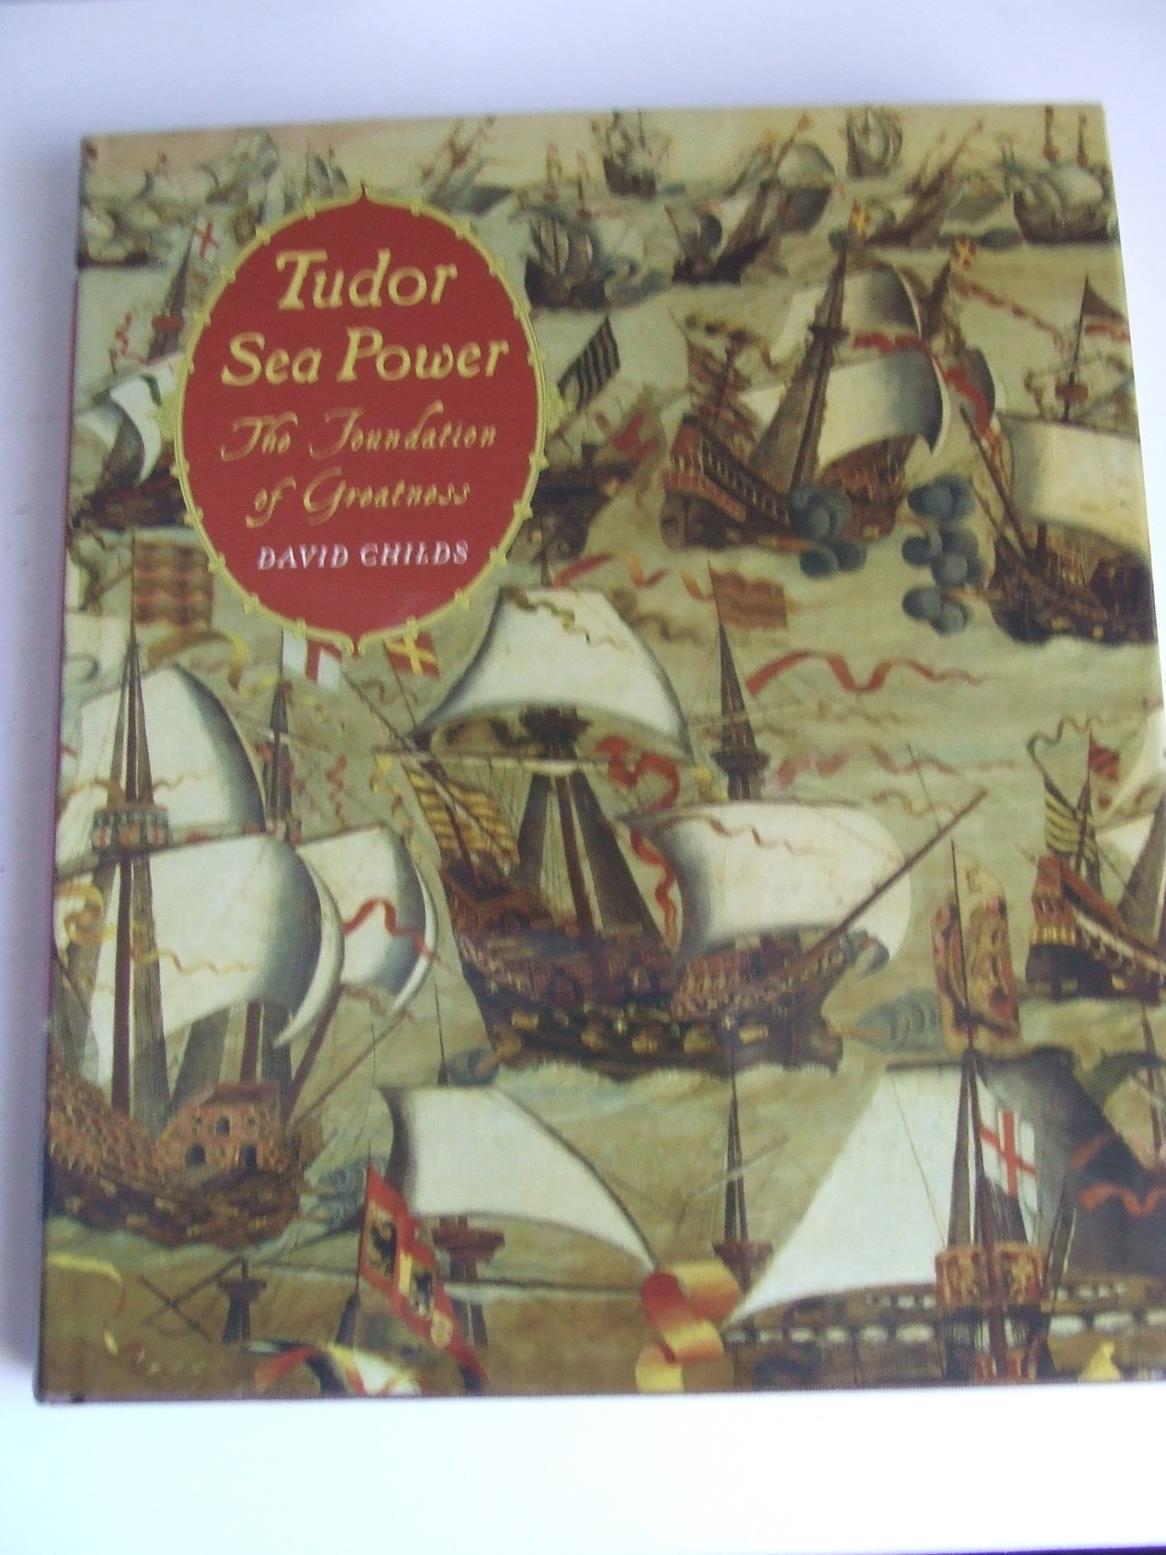 Tudor Sea Power, the foundation of greatness